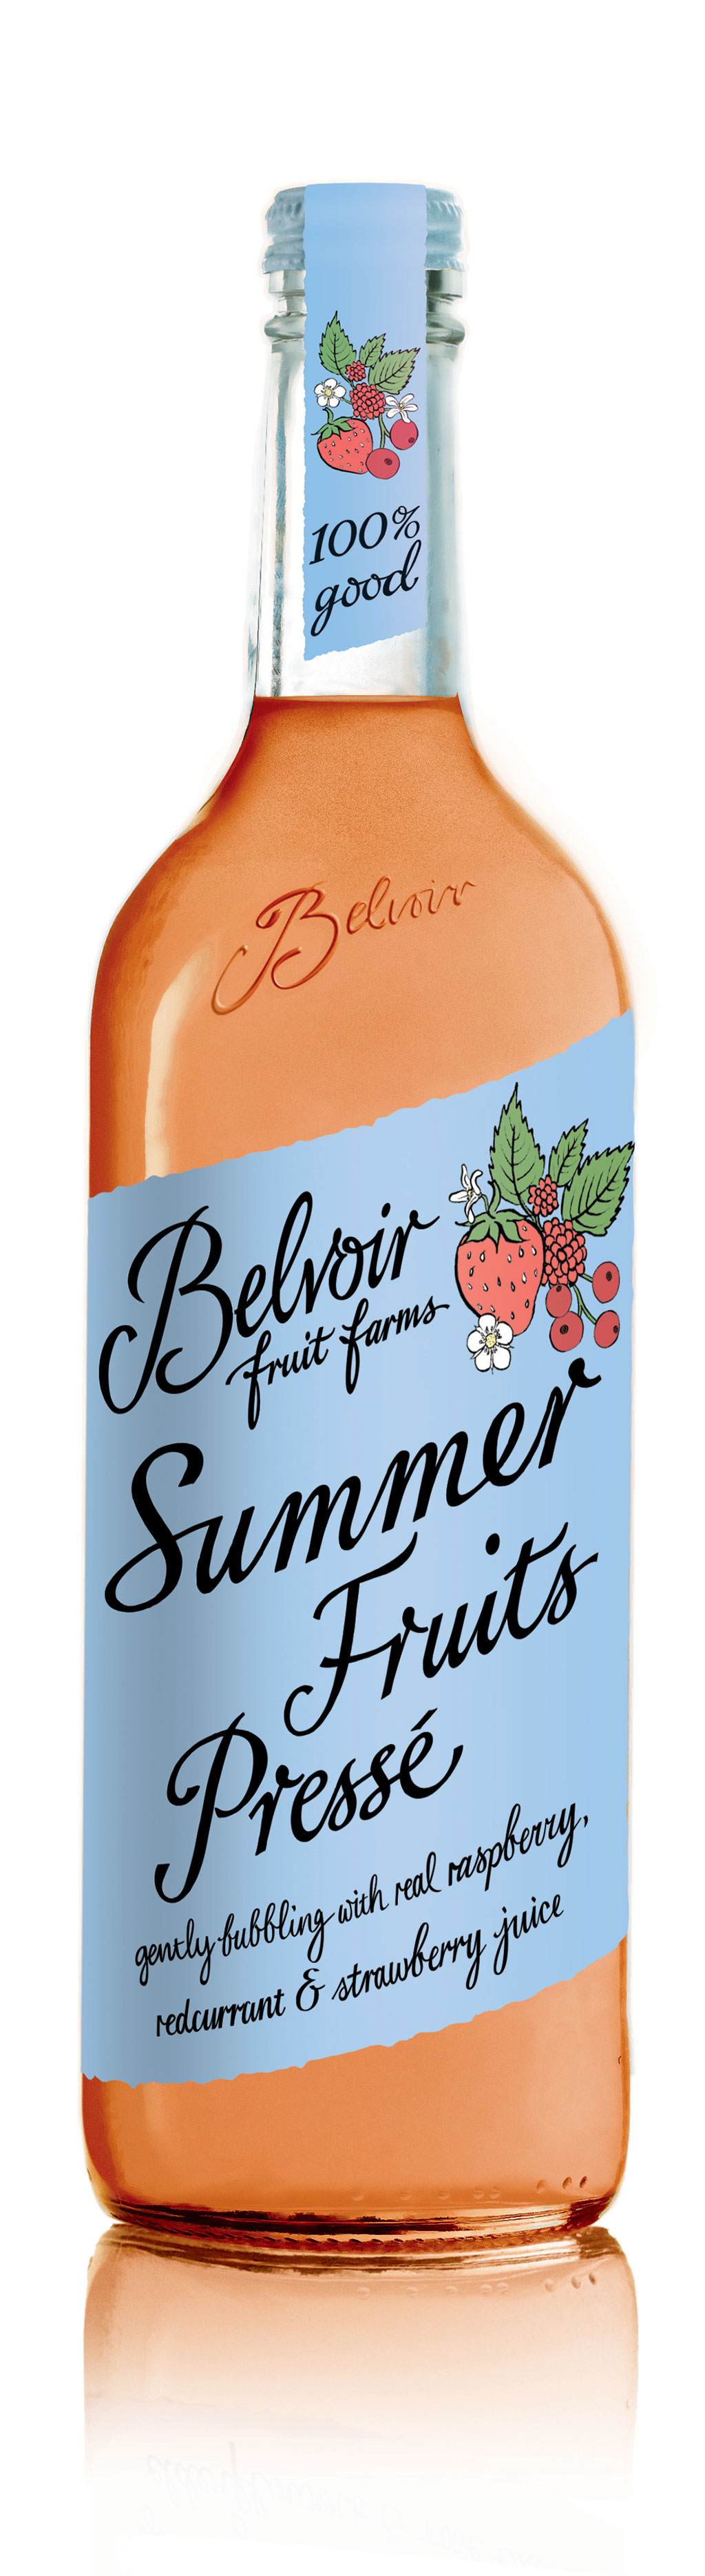 BE7618_Summer_Fruits_Presse_750ml_2014_B